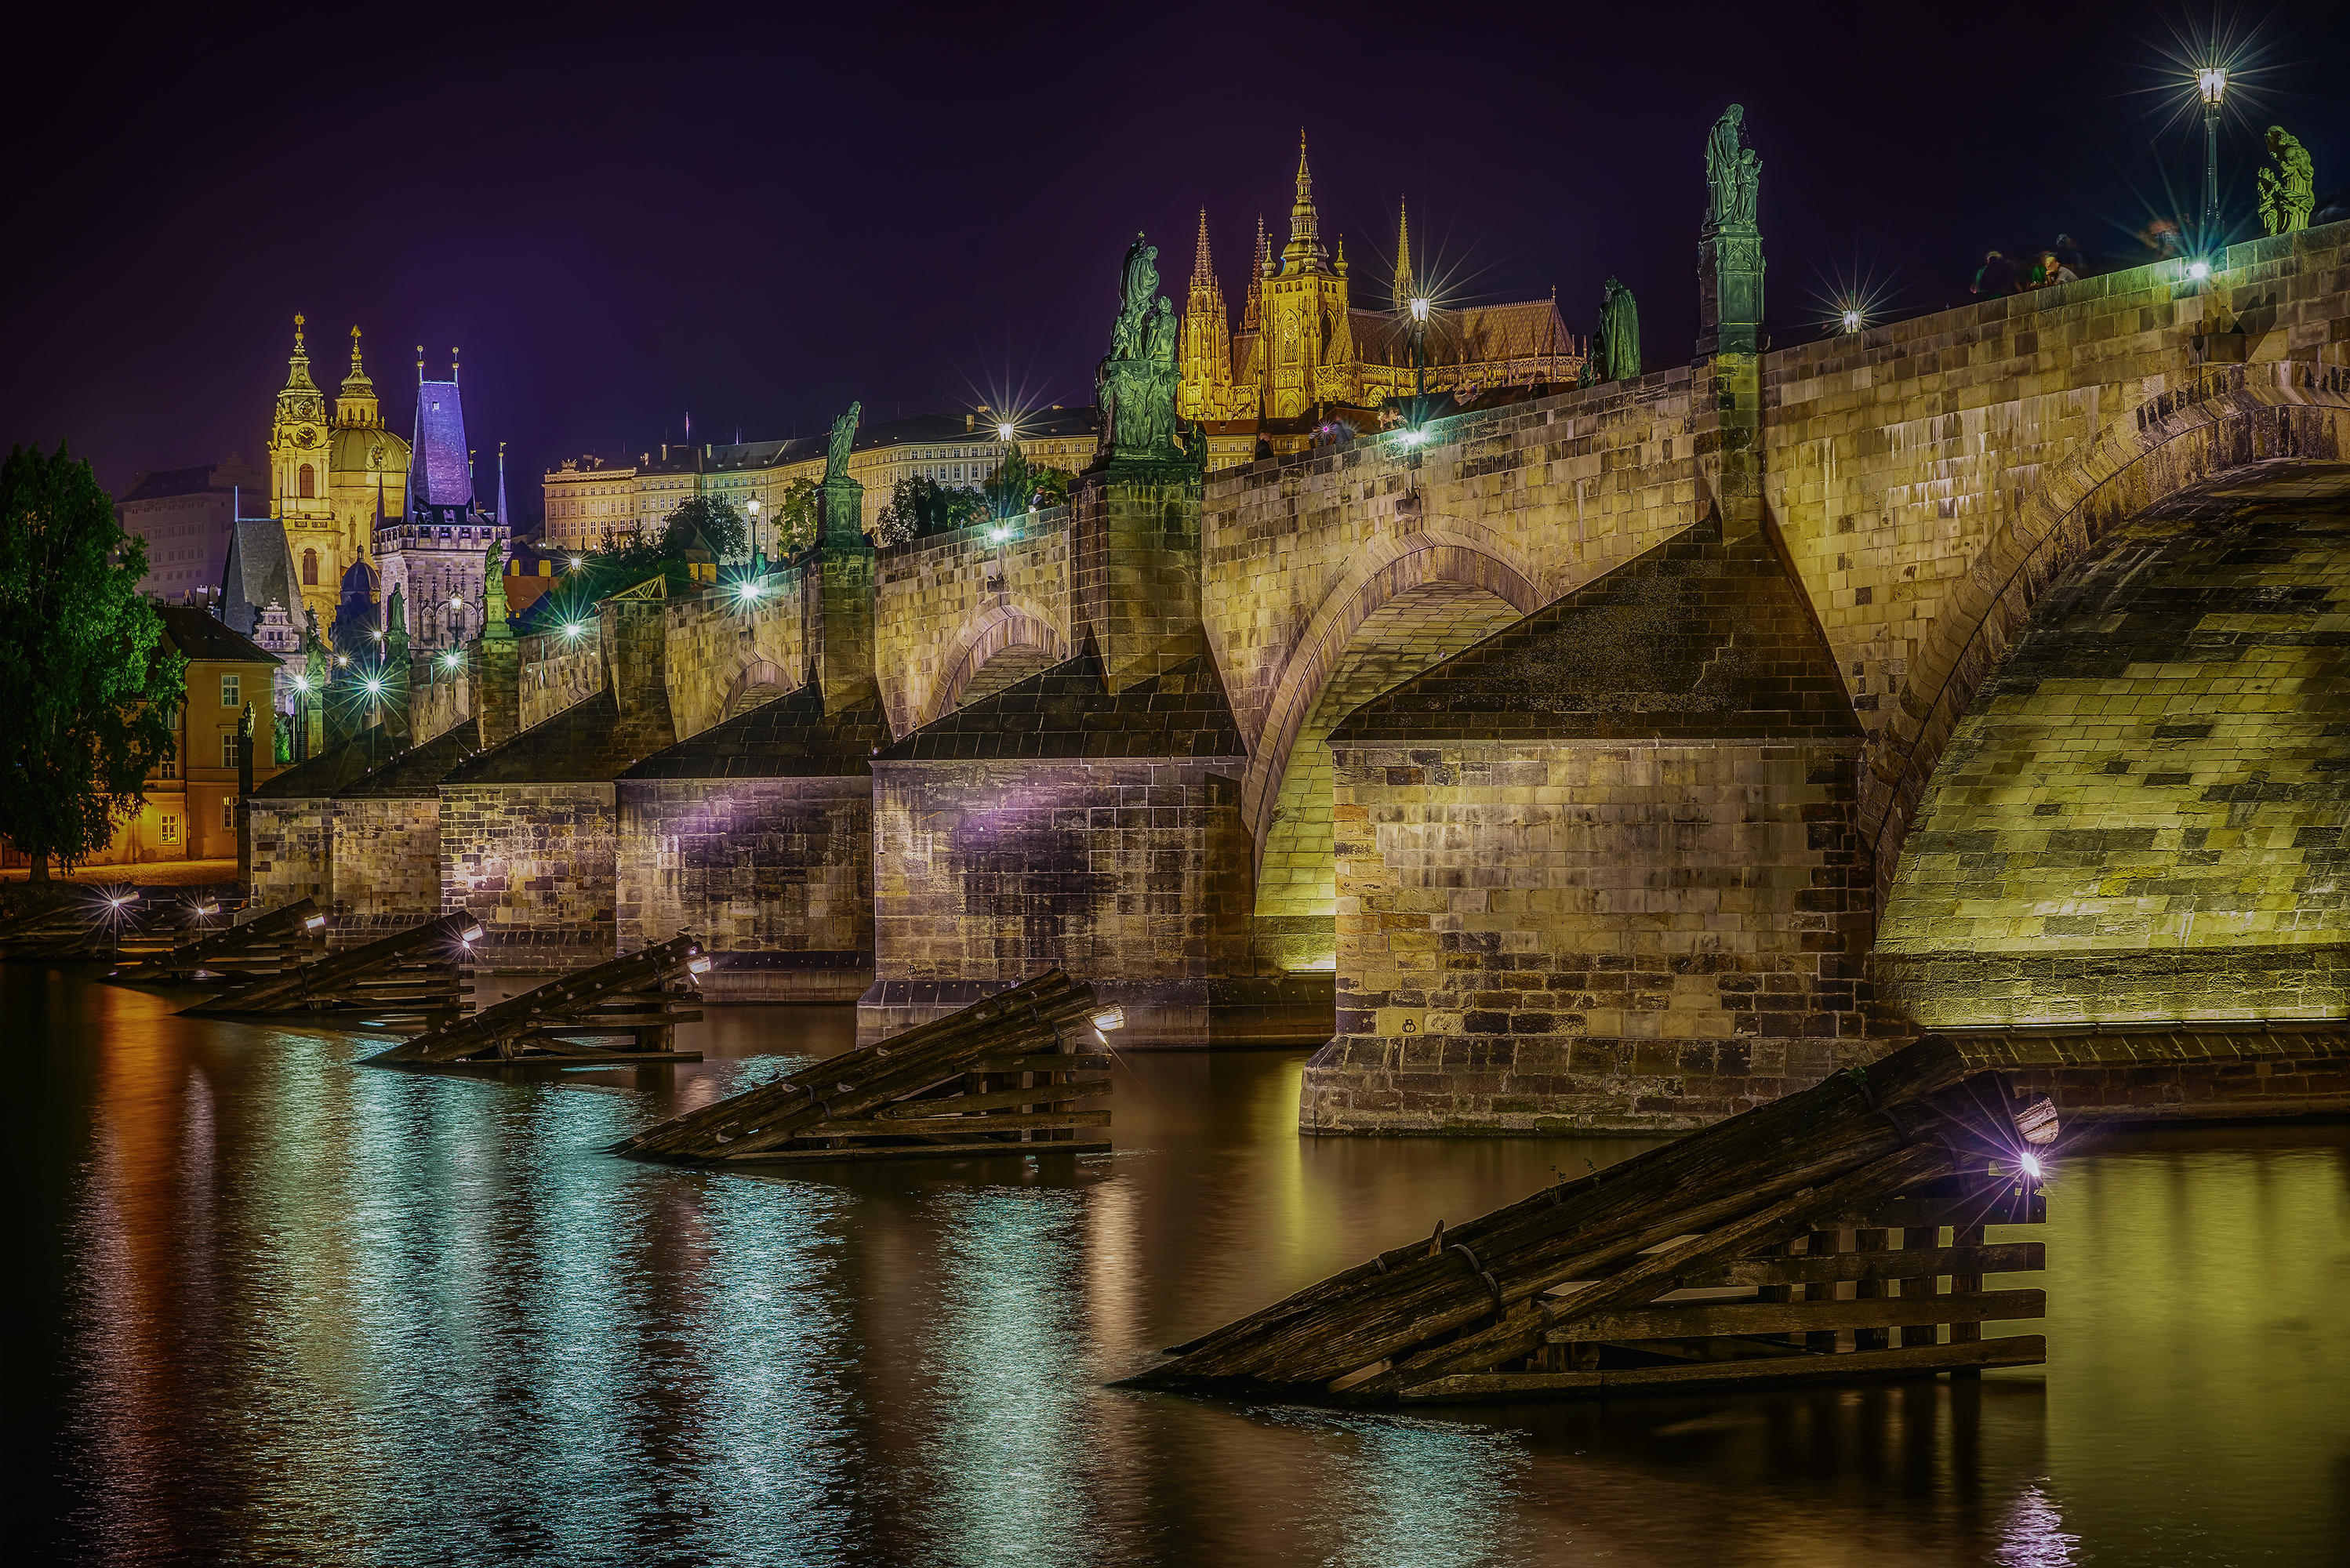 Wallpapers bridge Vltava river night city on the desktop